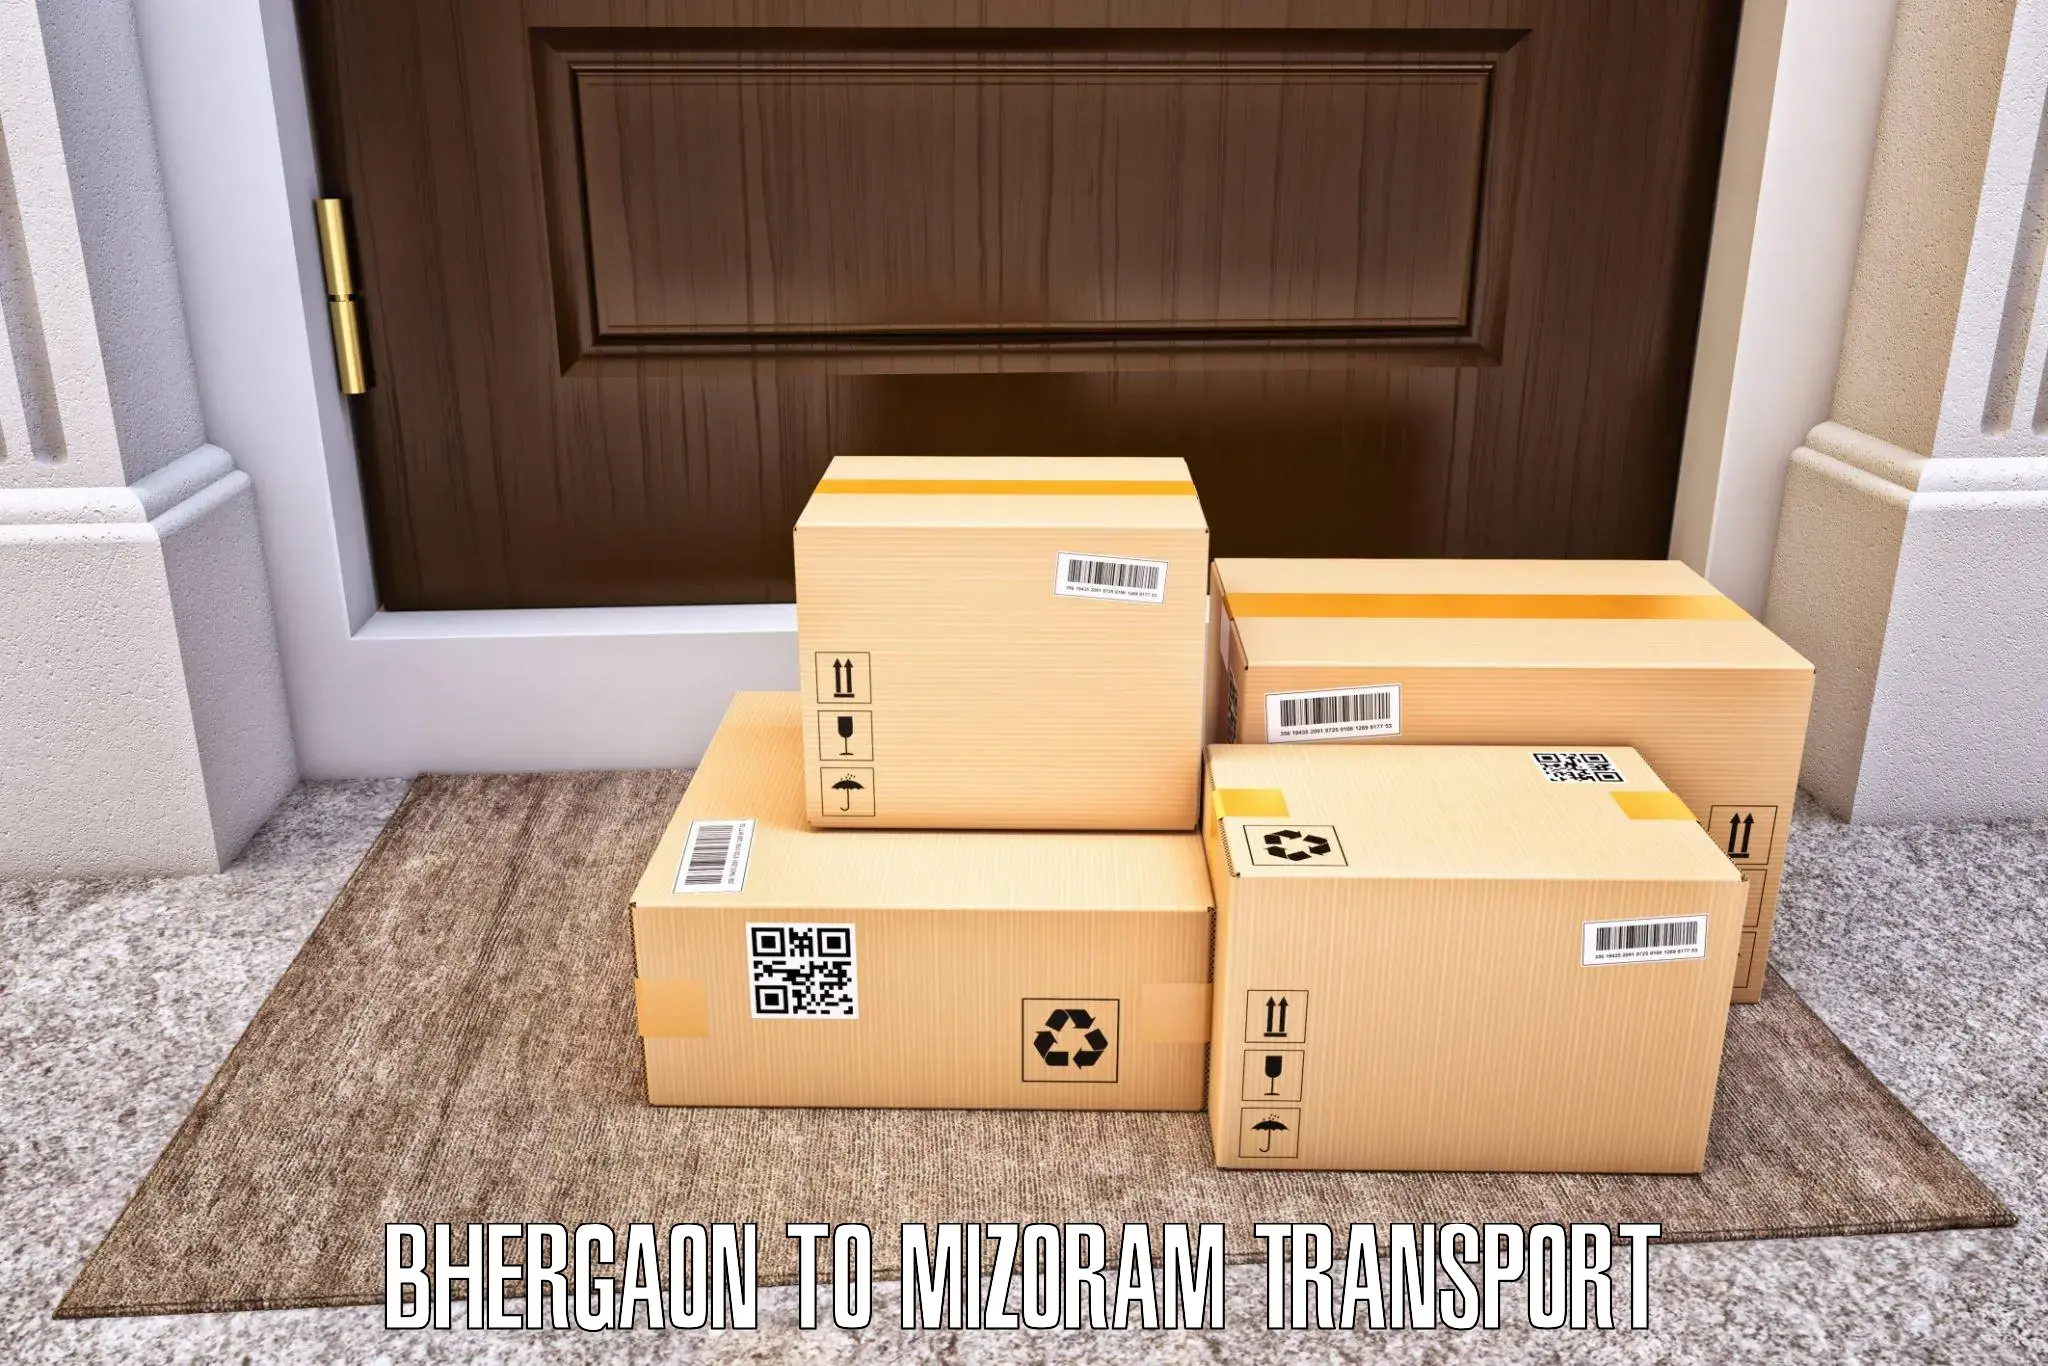 Transport in sharing Bhergaon to Aizawl